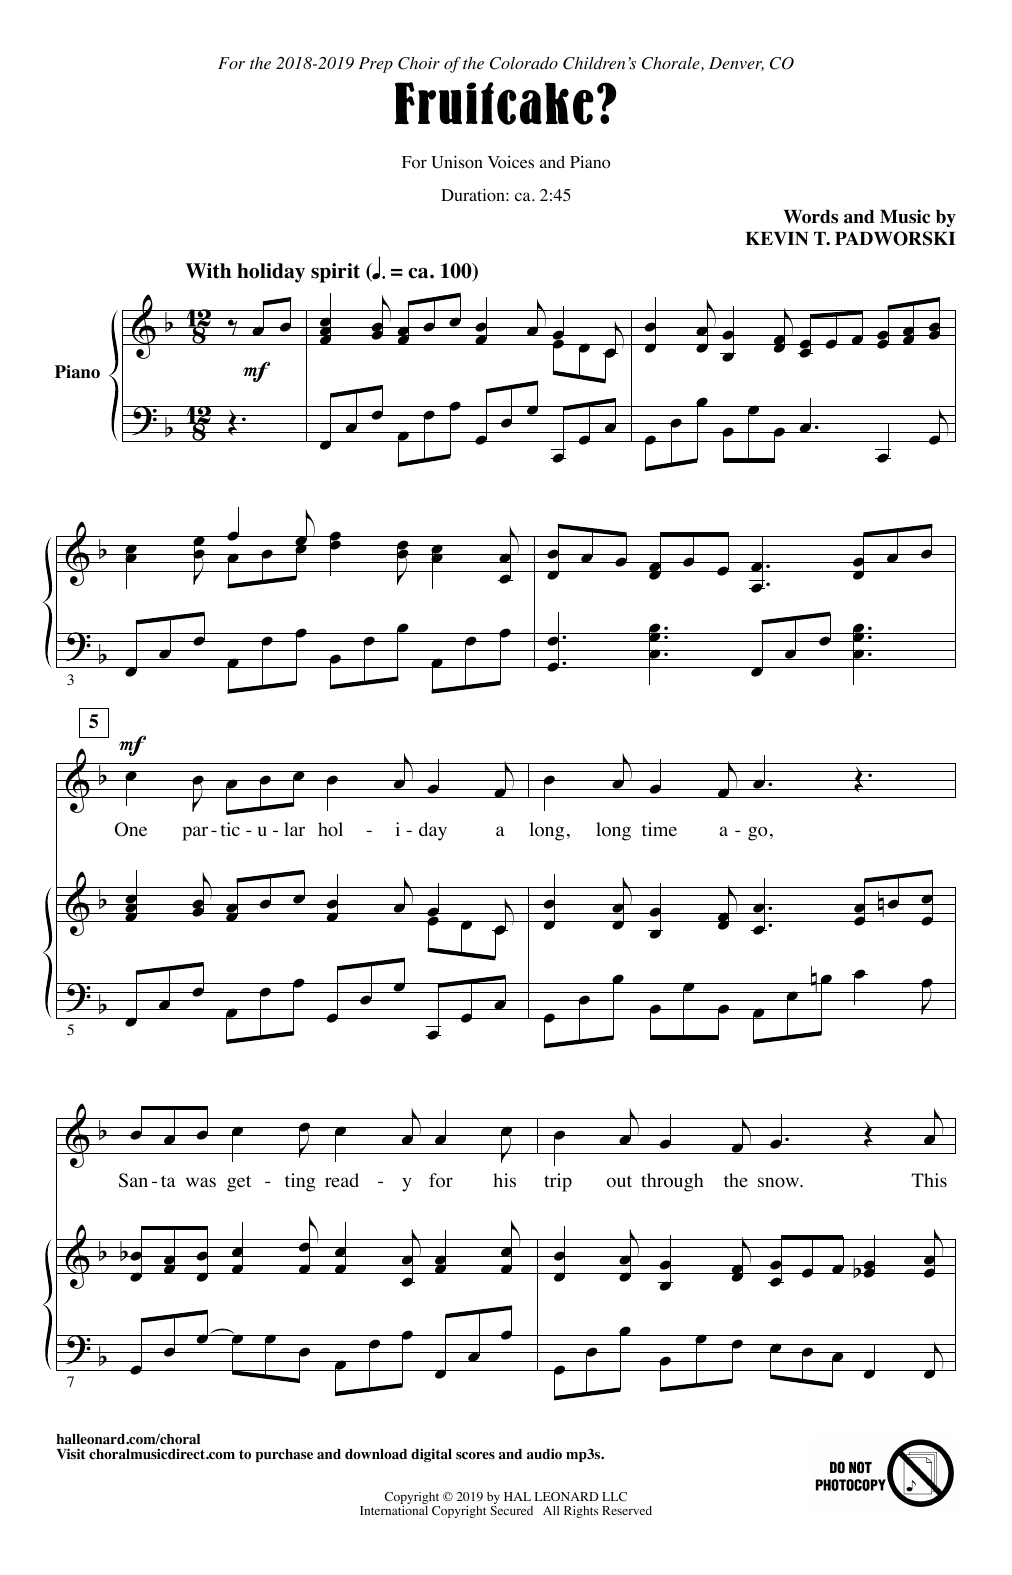 Kevin T. Padworski Fruitcake? Sheet Music Notes & Chords for Unison Choir - Download or Print PDF